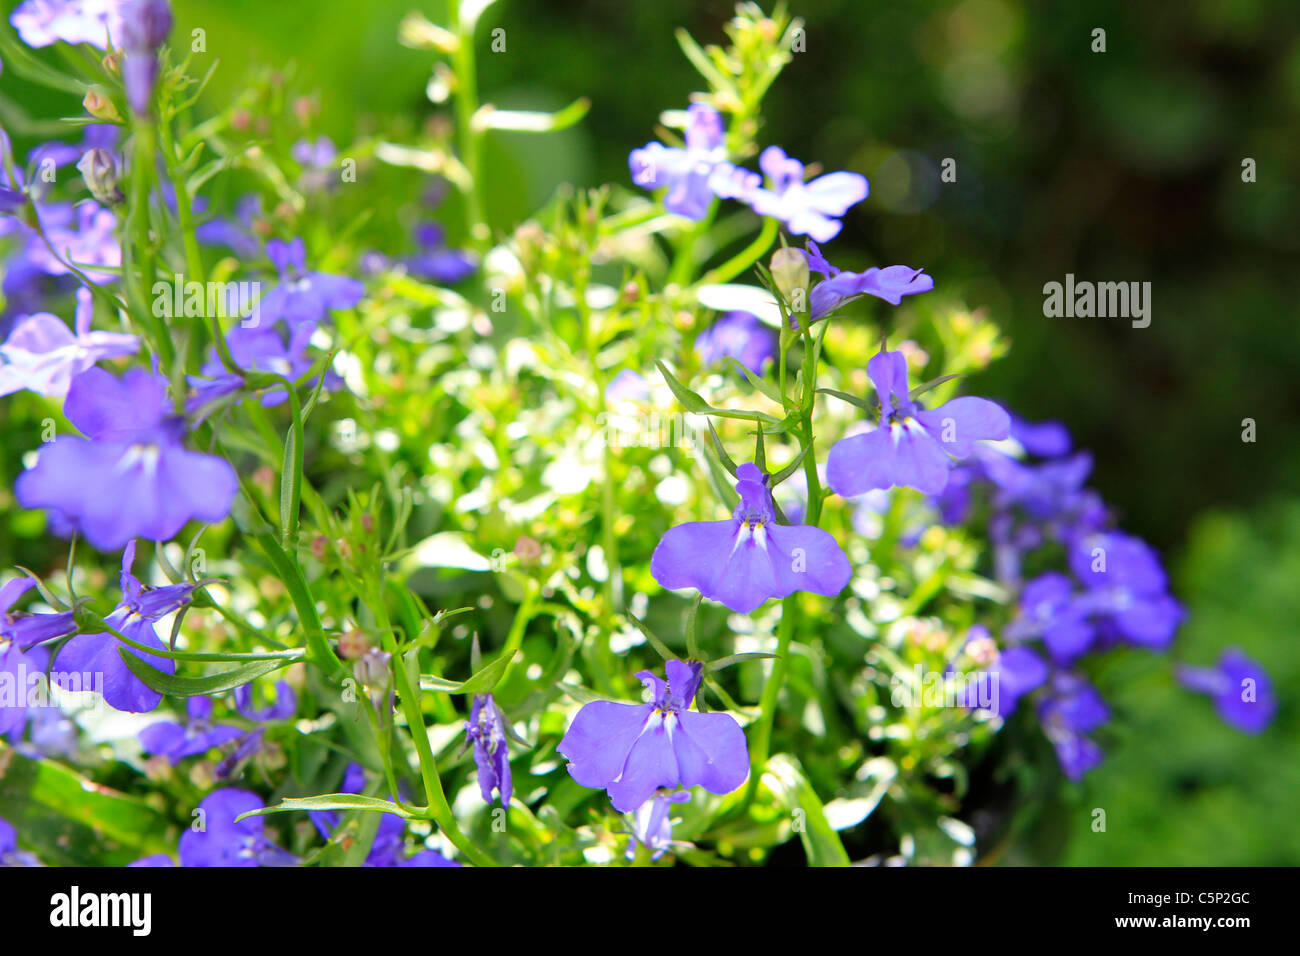 Blooming garden flowers, lobelia Stock Photo